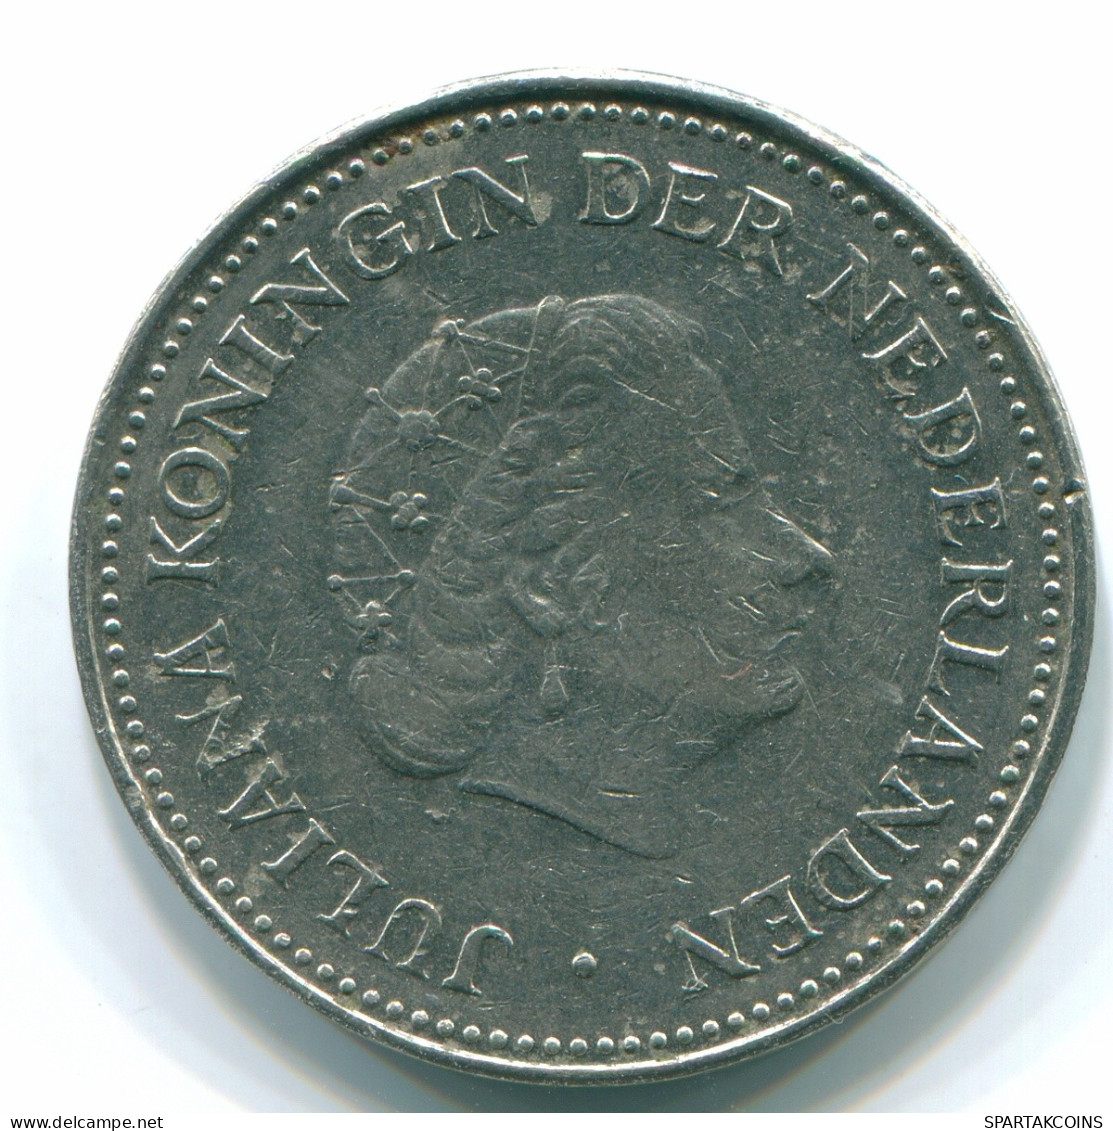 1 GULDEN 1971 NETHERLANDS ANTILLES Nickel Colonial Coin #S11943.U.A - Antilles Néerlandaises